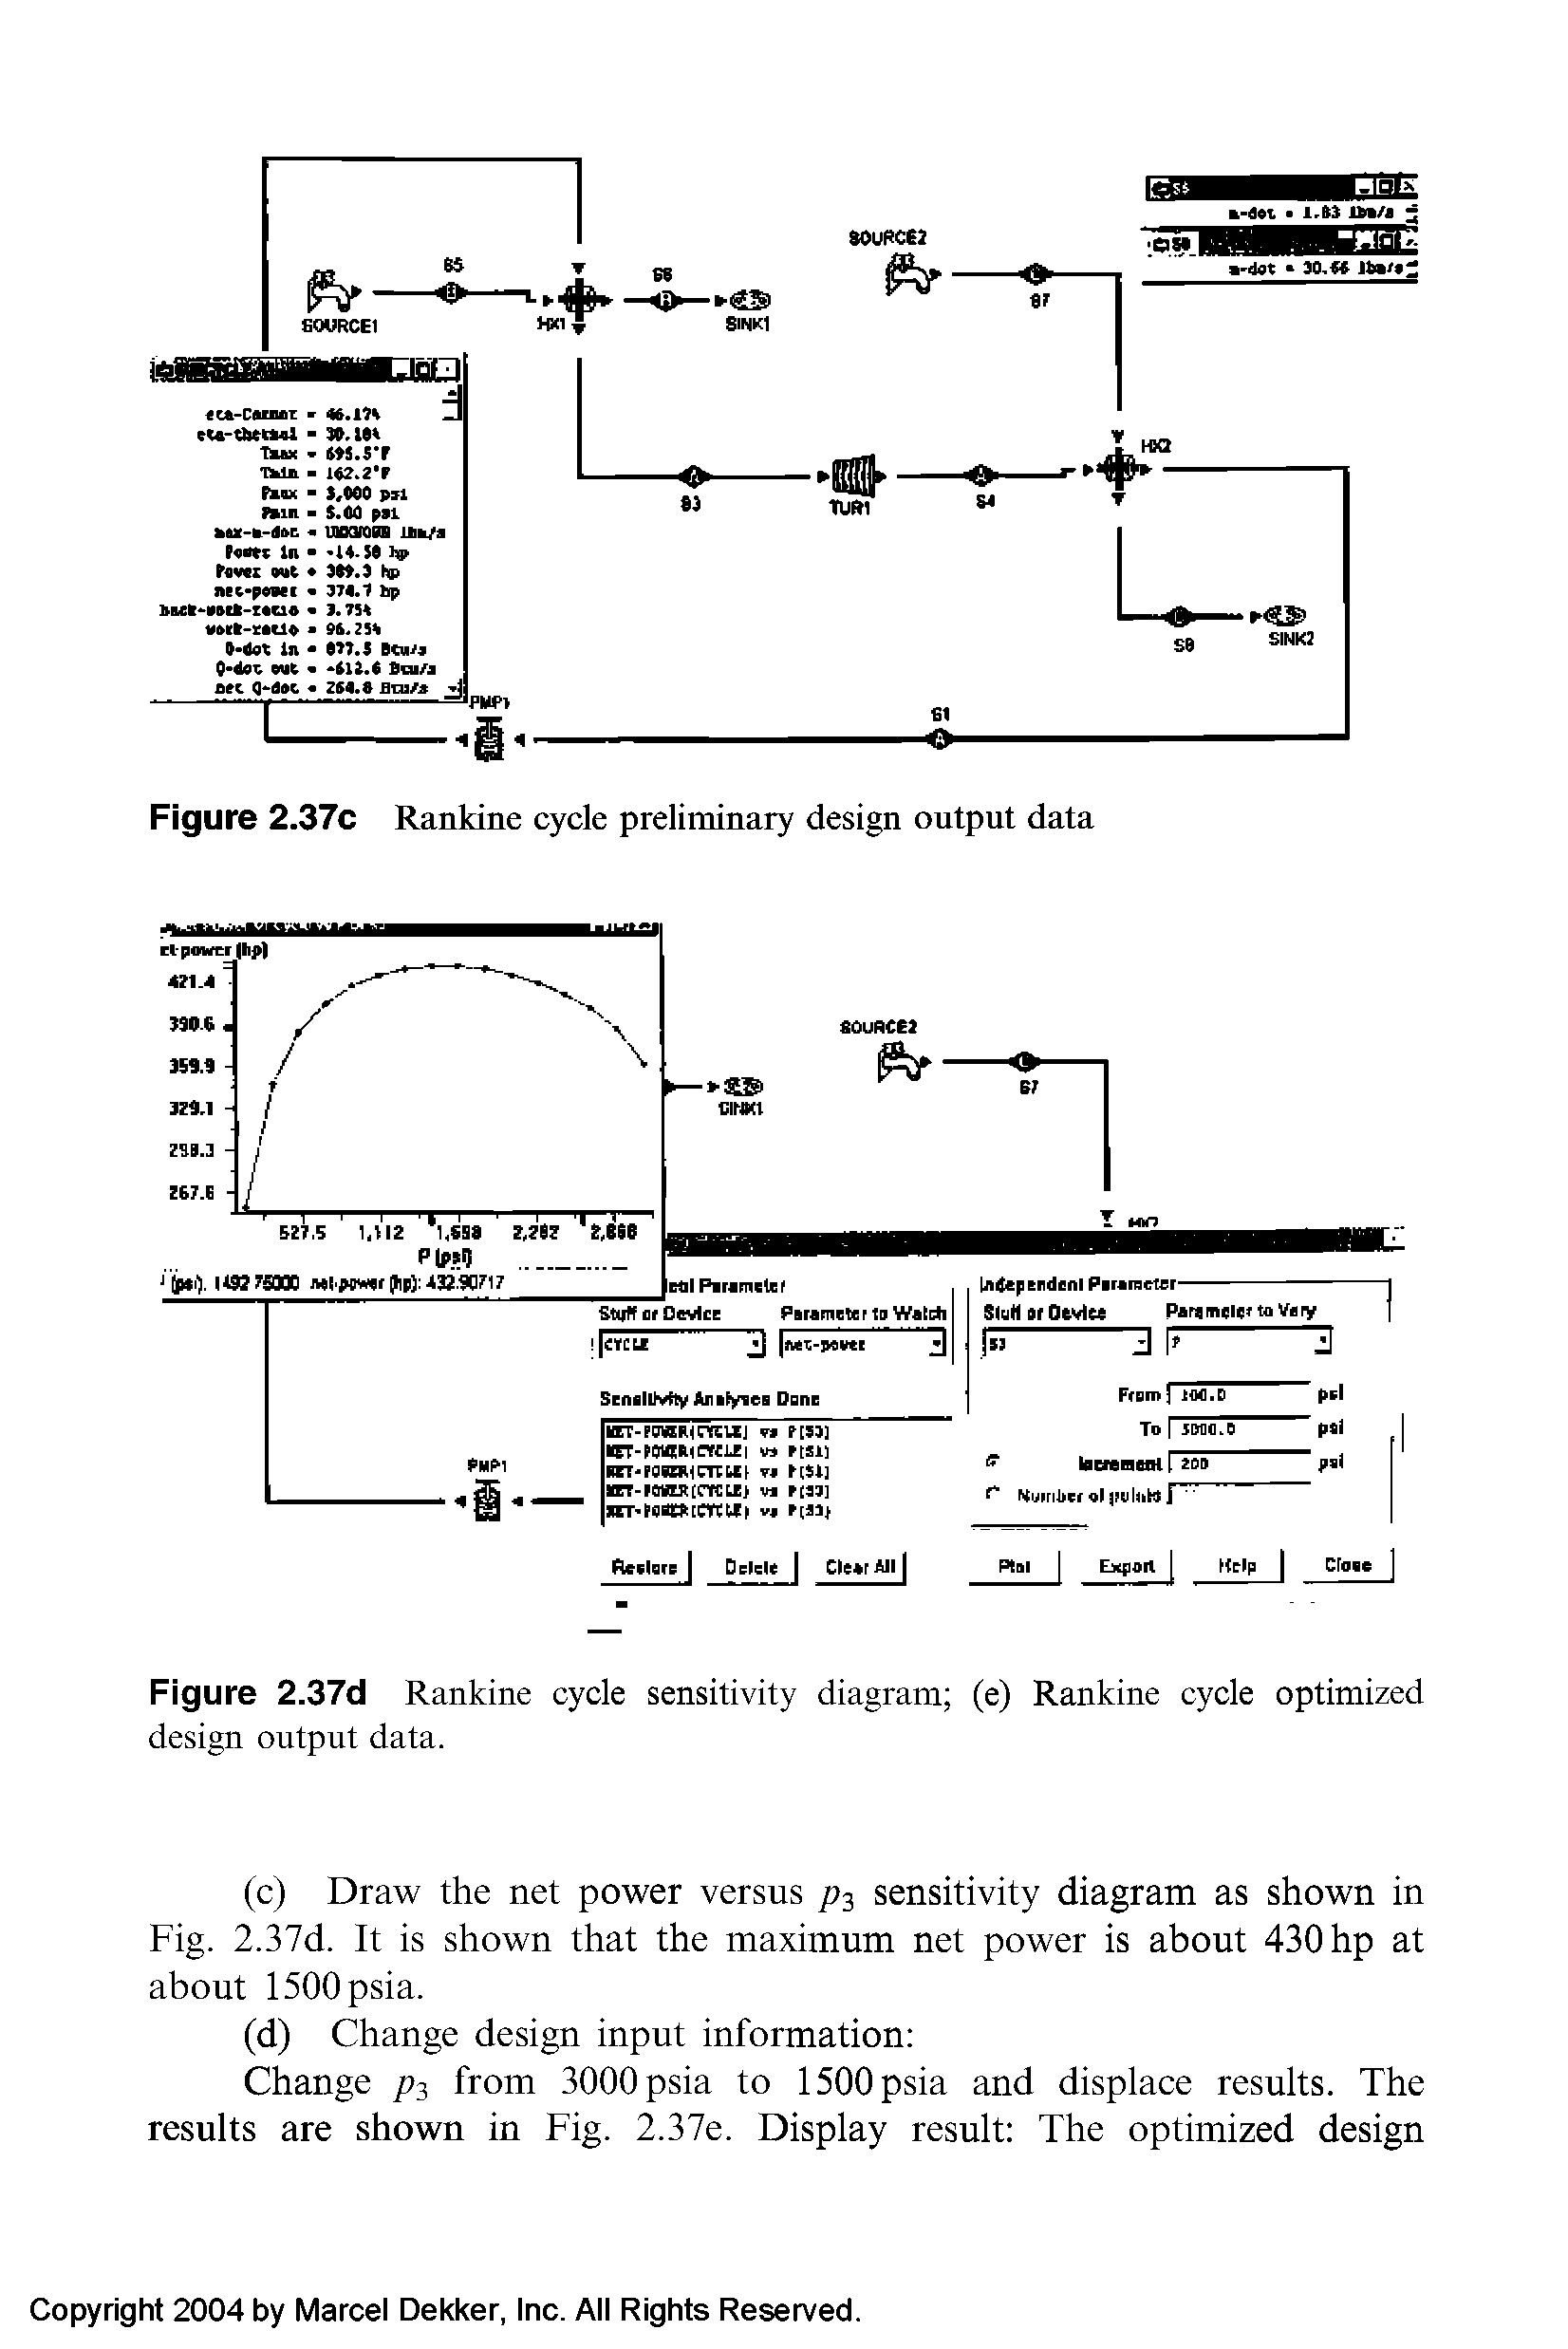 Figure 2.37d Rankine cycle sensitivity diagram (e) Rankine cycle optimized design output data.